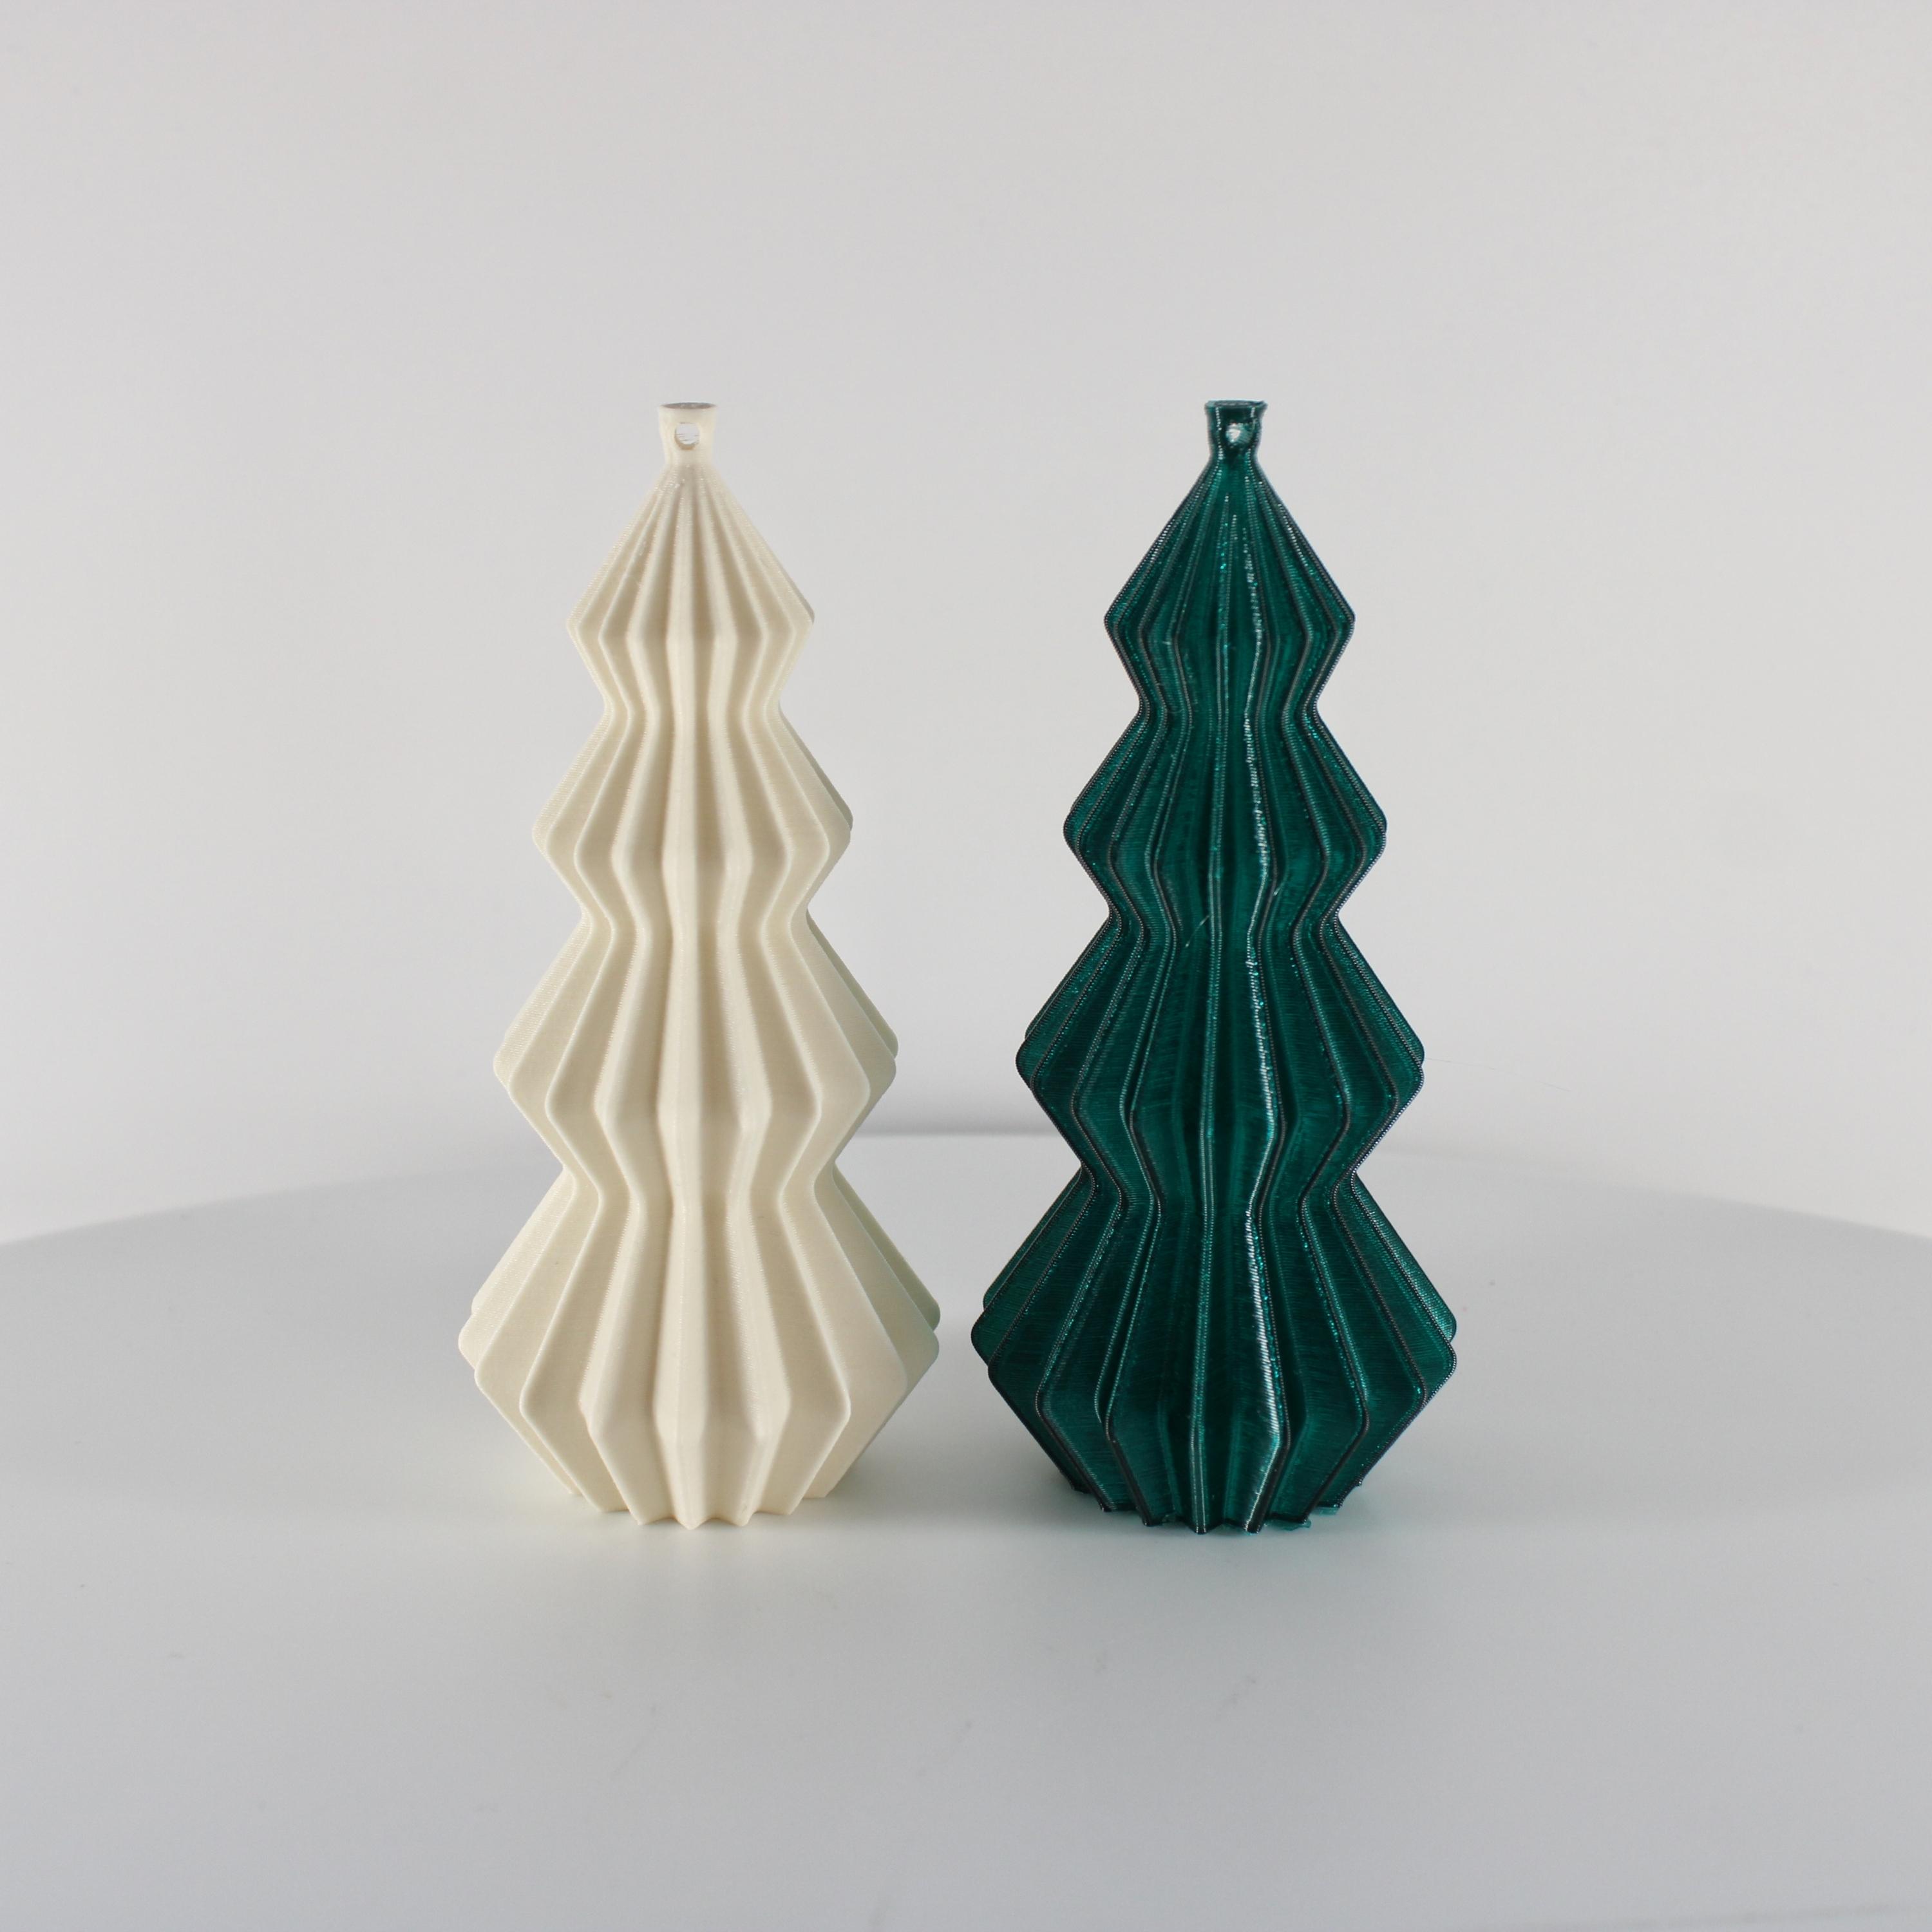  Christmas Tree Ornament, Christmas Decor by Slimprint  3d model